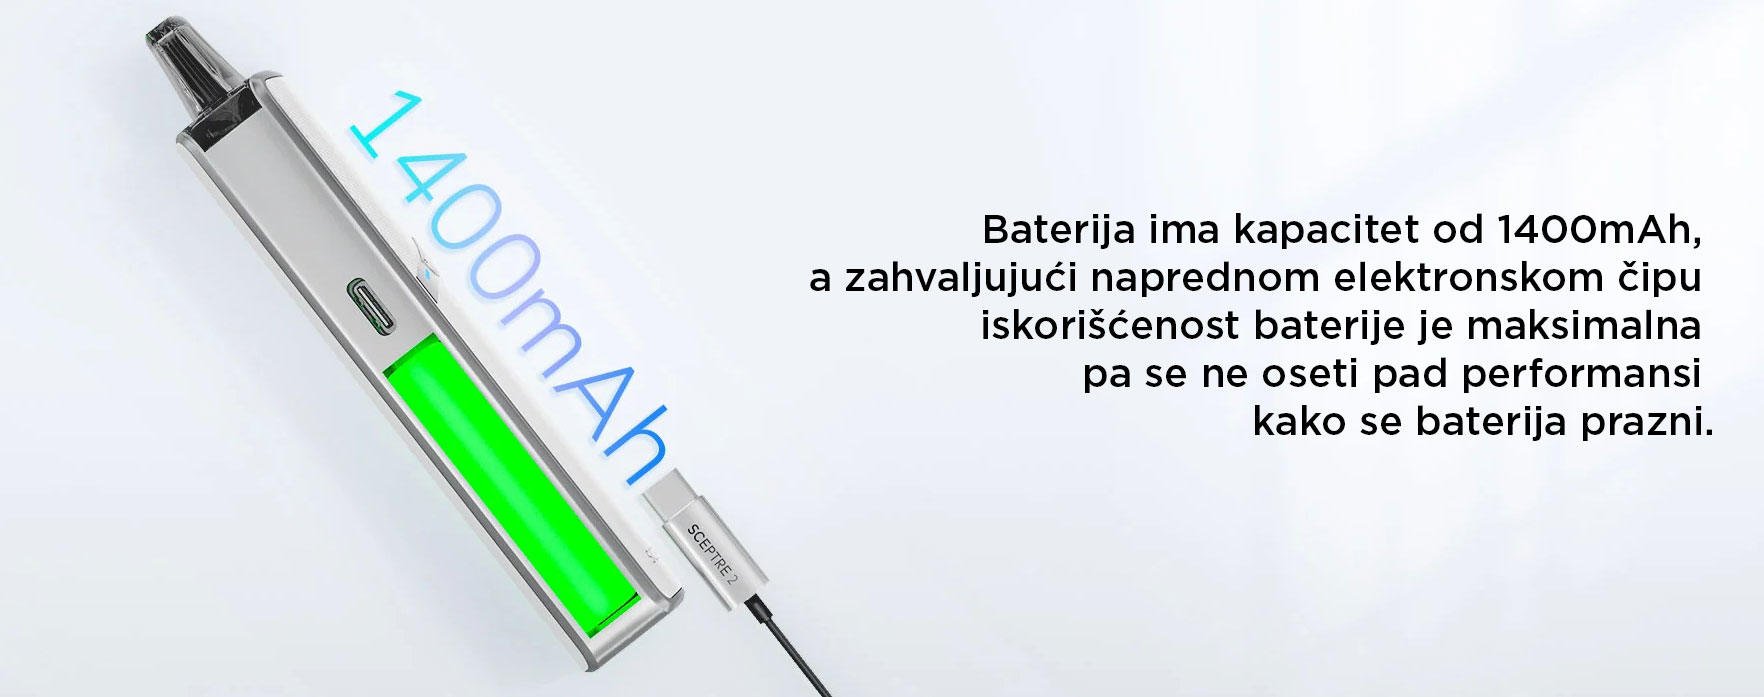 Umbrella sceptre elektronska cigareta1